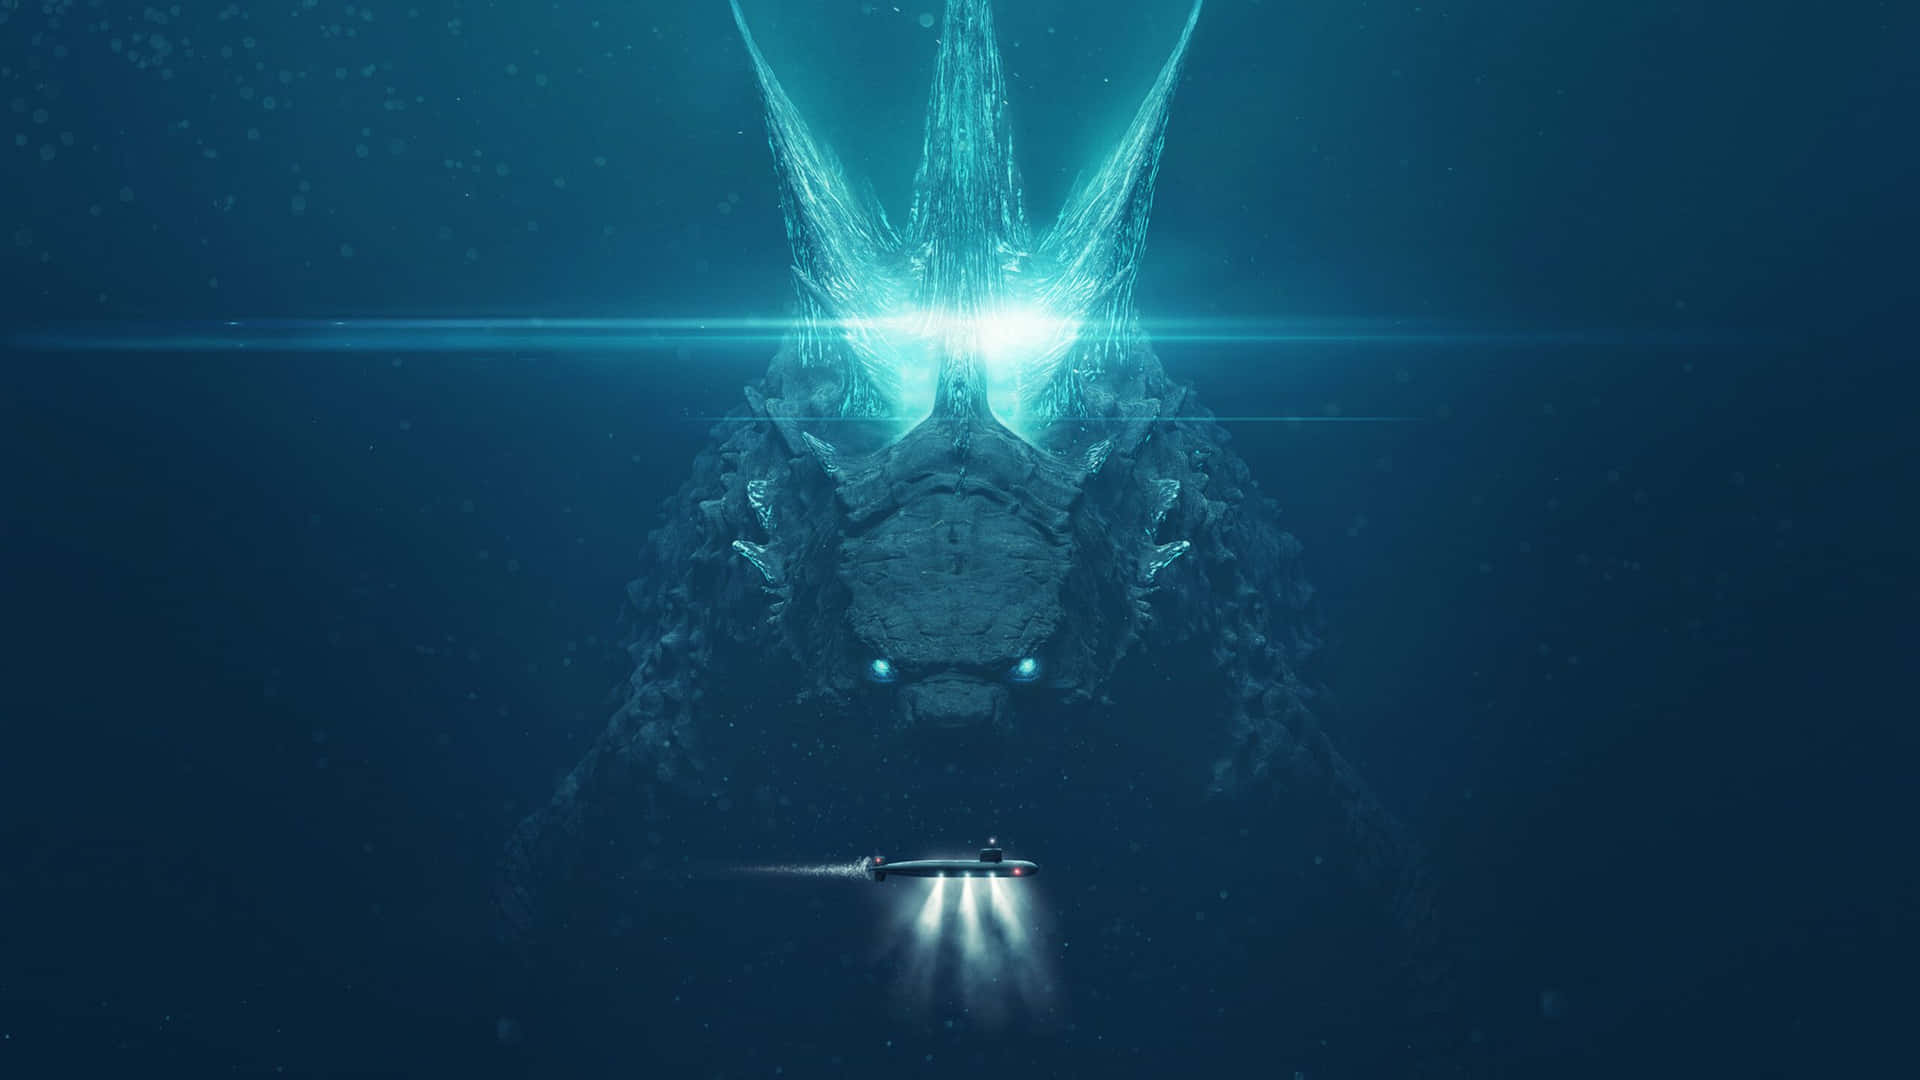 Godzilla - The Movie Poster Wallpaper